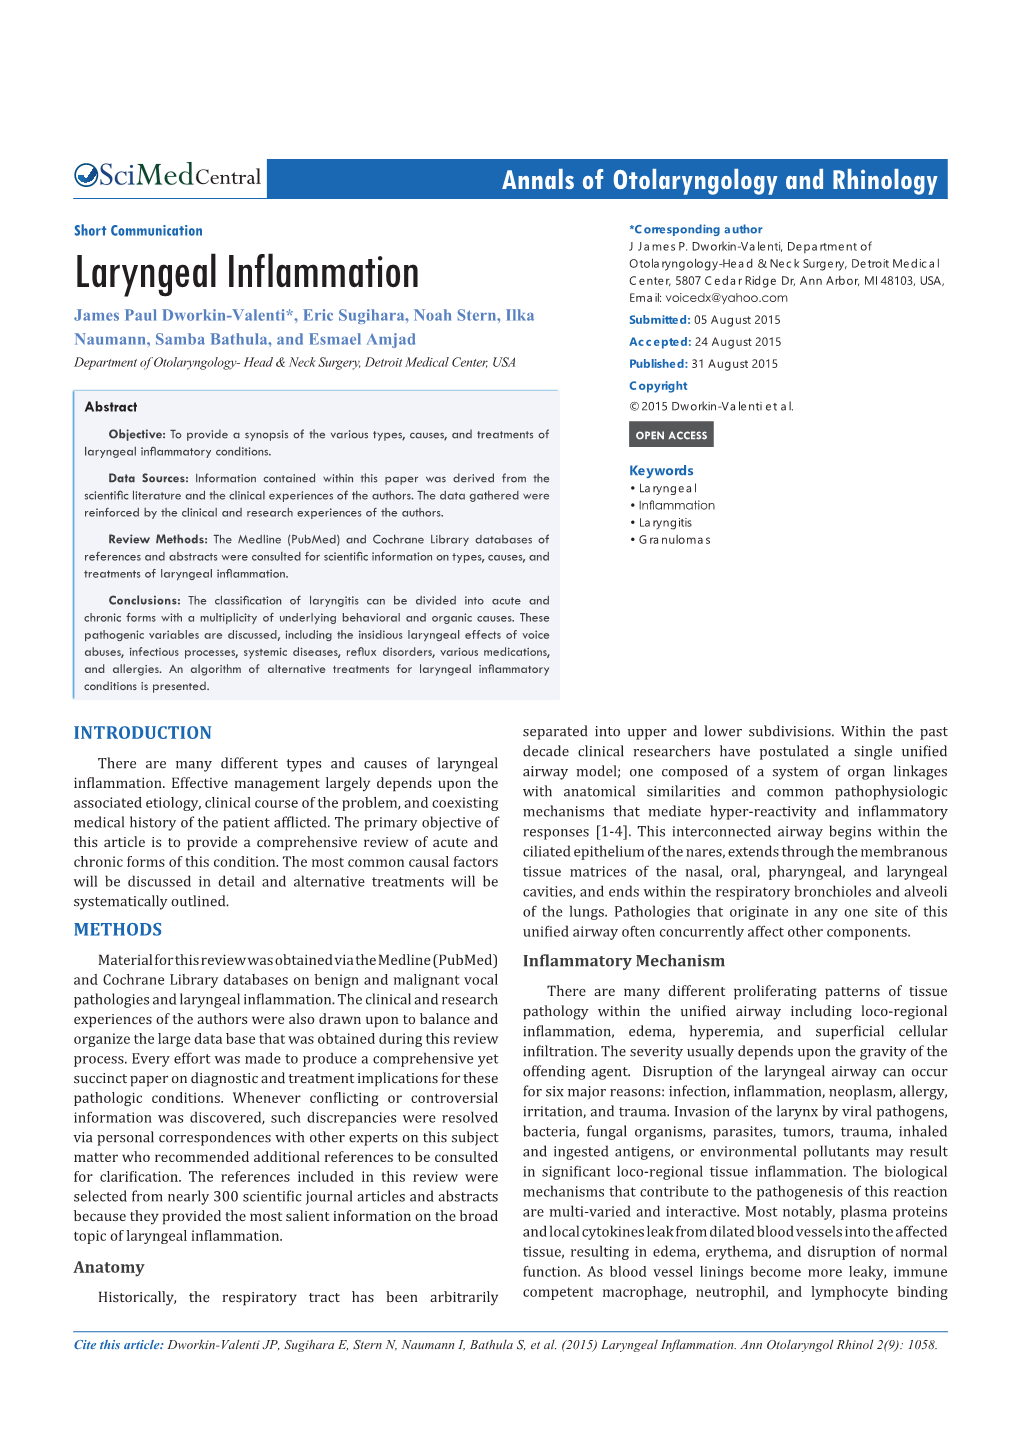 Laryngeal Inflammation